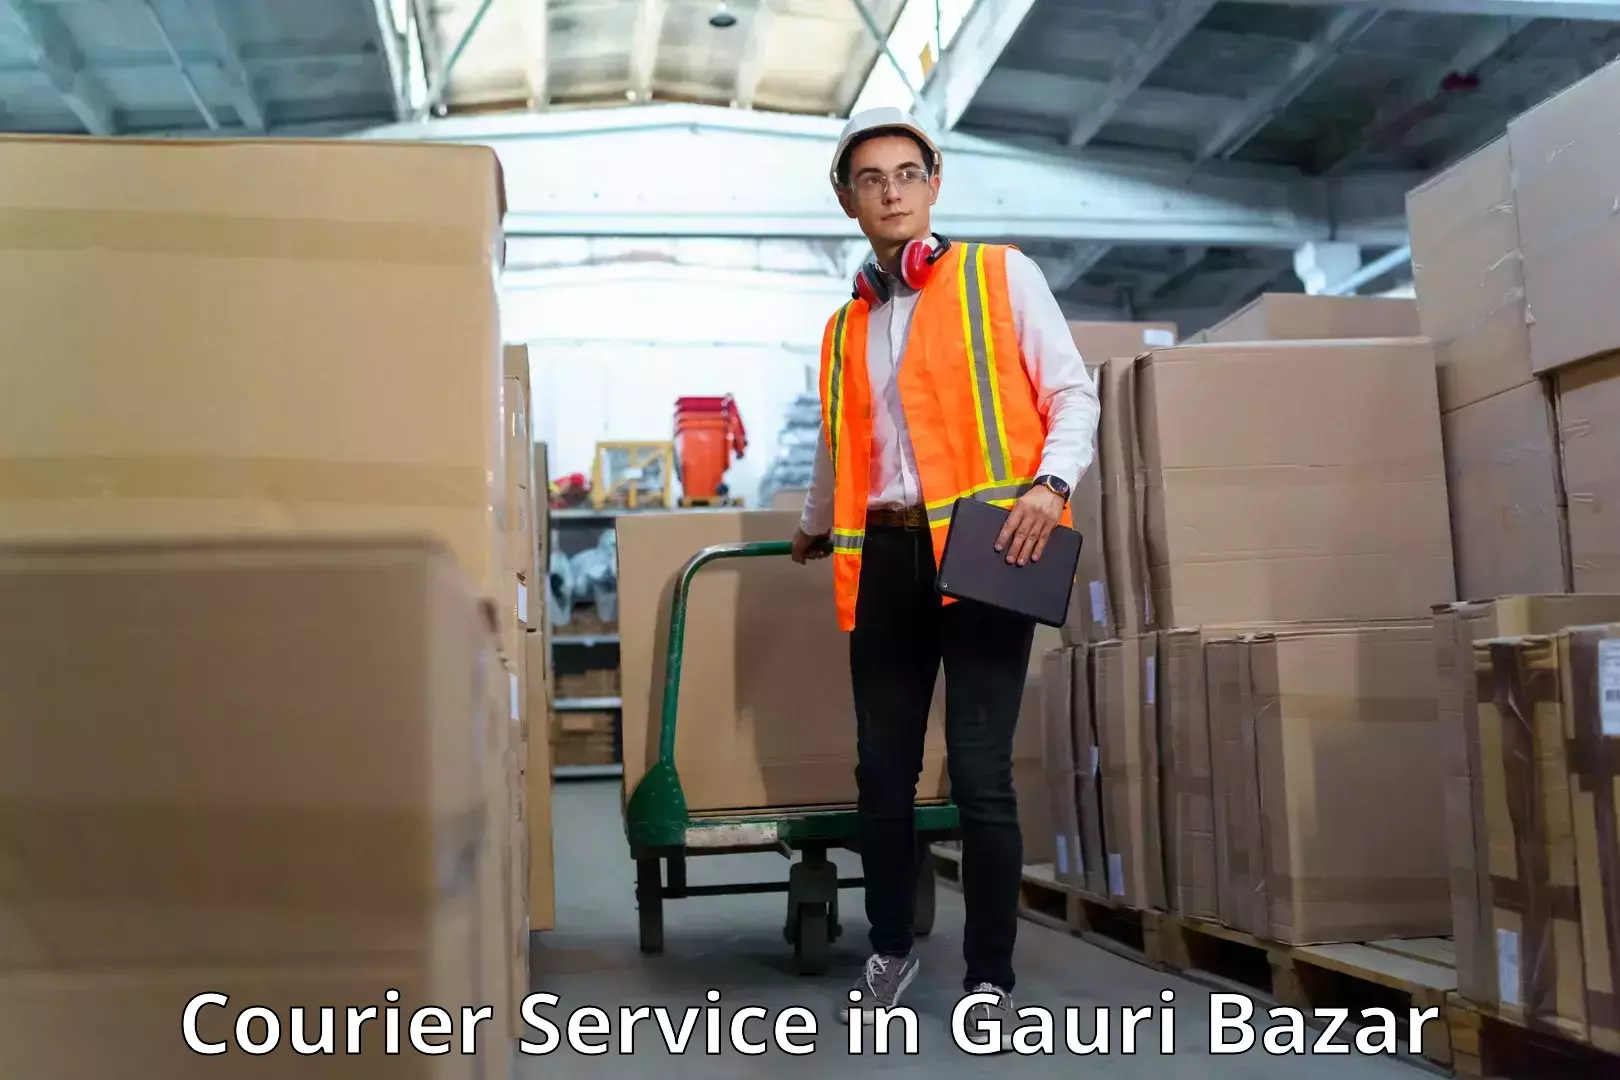 Affordable parcel service in Gauri Bazar